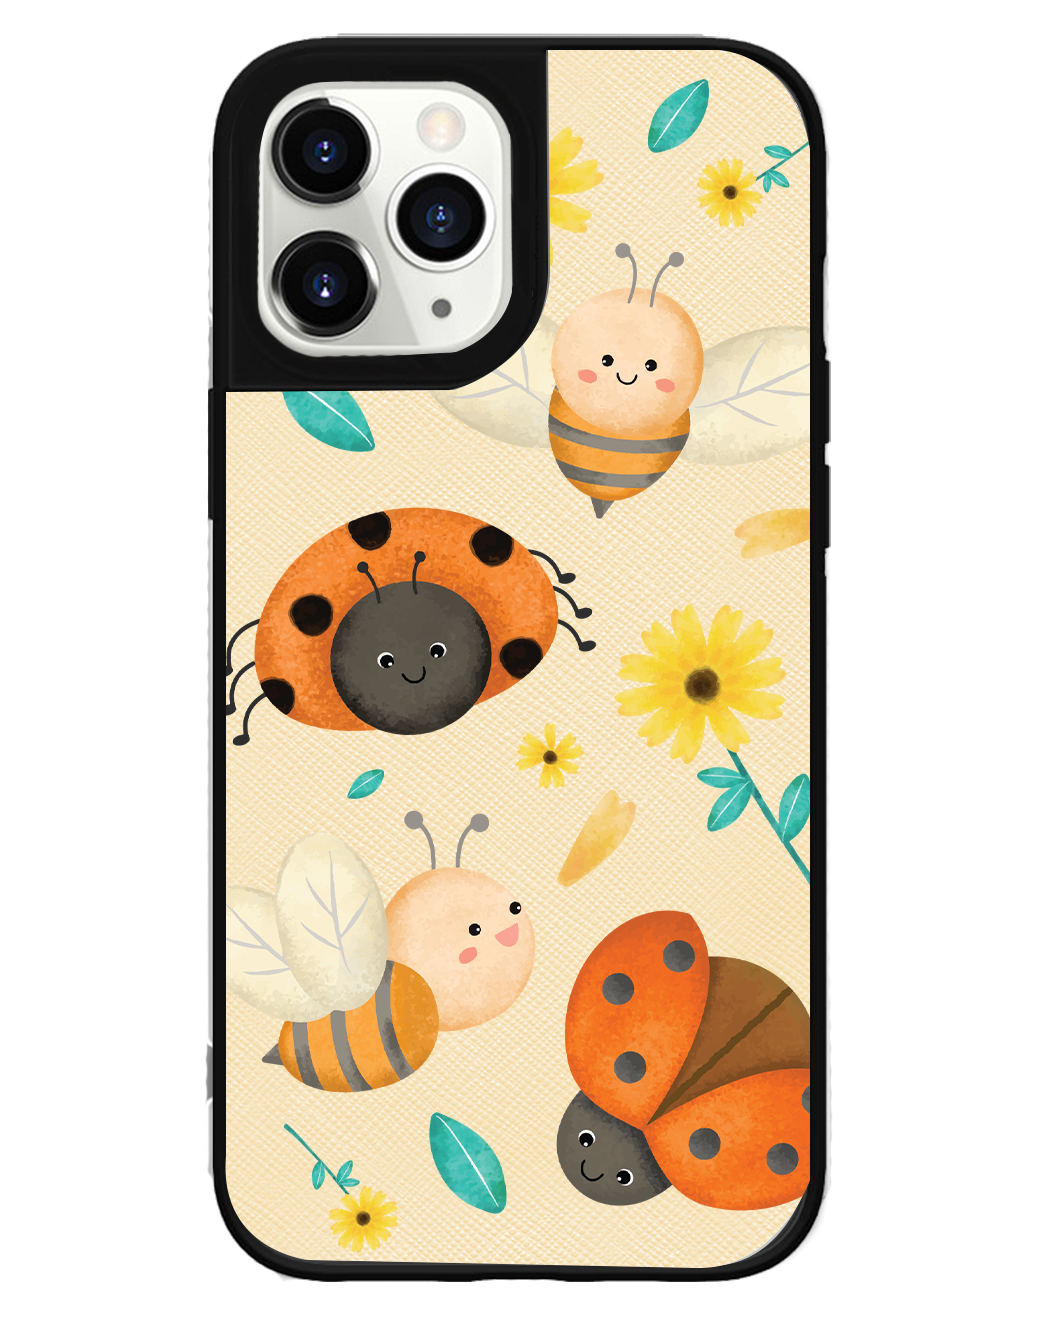 iPhone Leather Grip Case - Ladybug & Bee